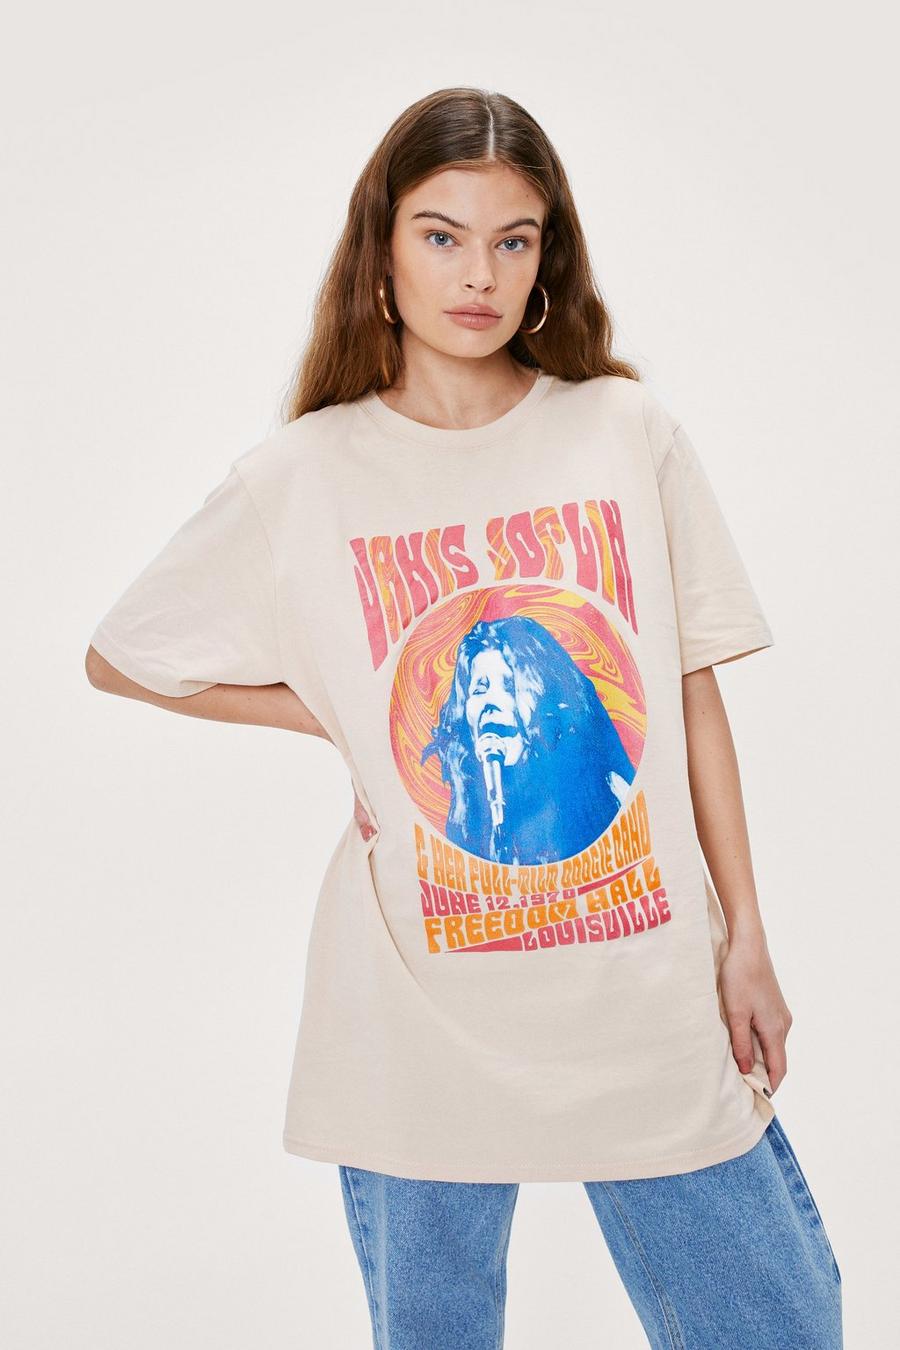 Janis Joplin License T-Shirt